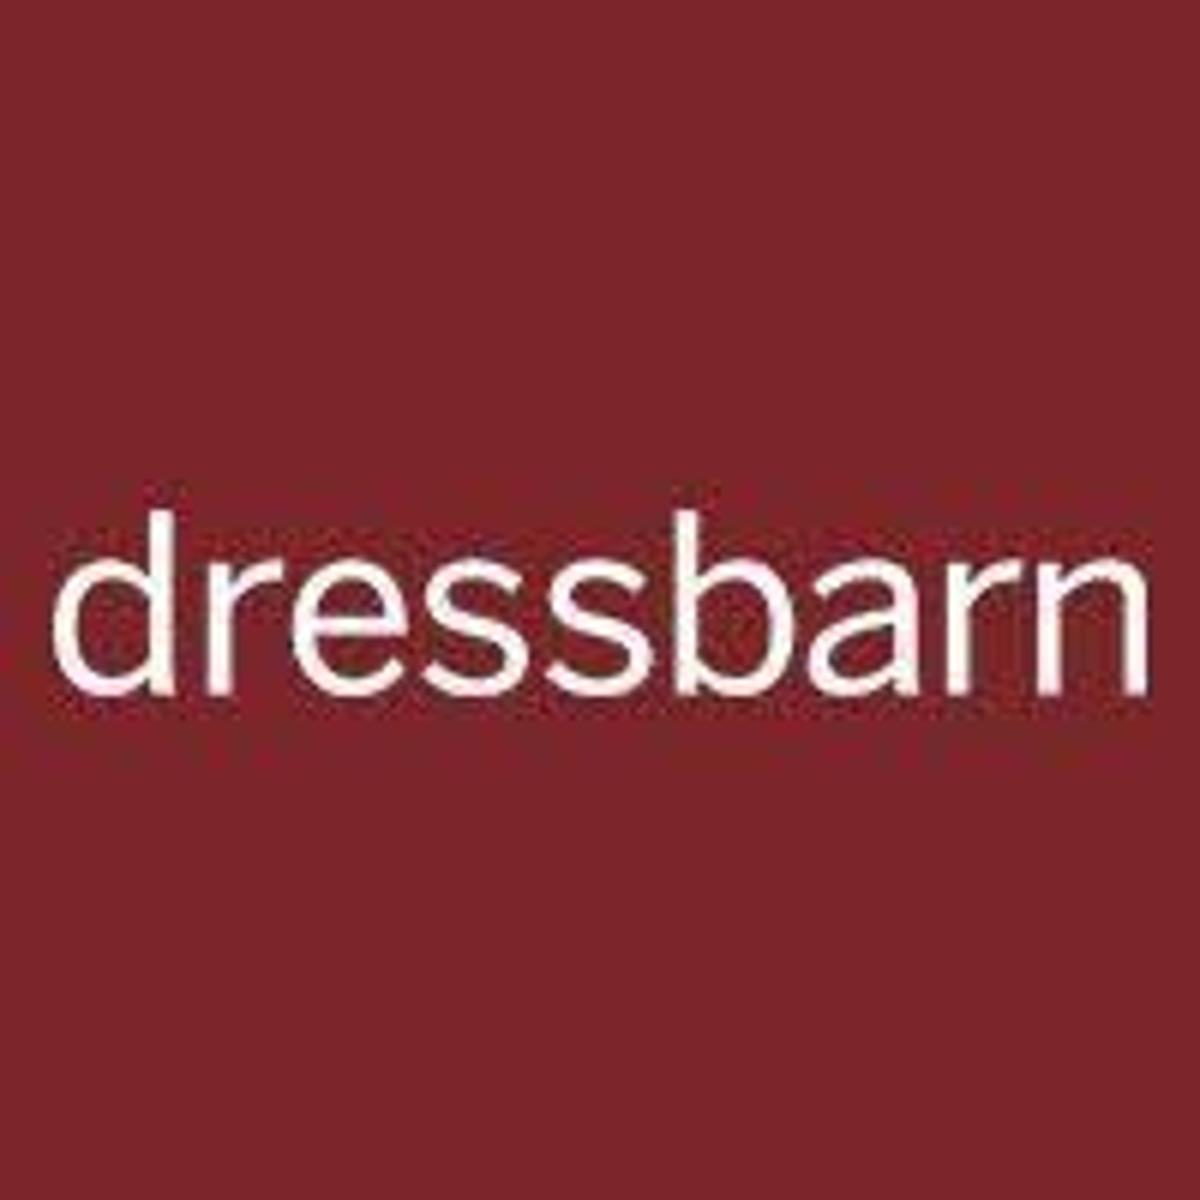 Dressbarn Logo - Dressbarn going out of business